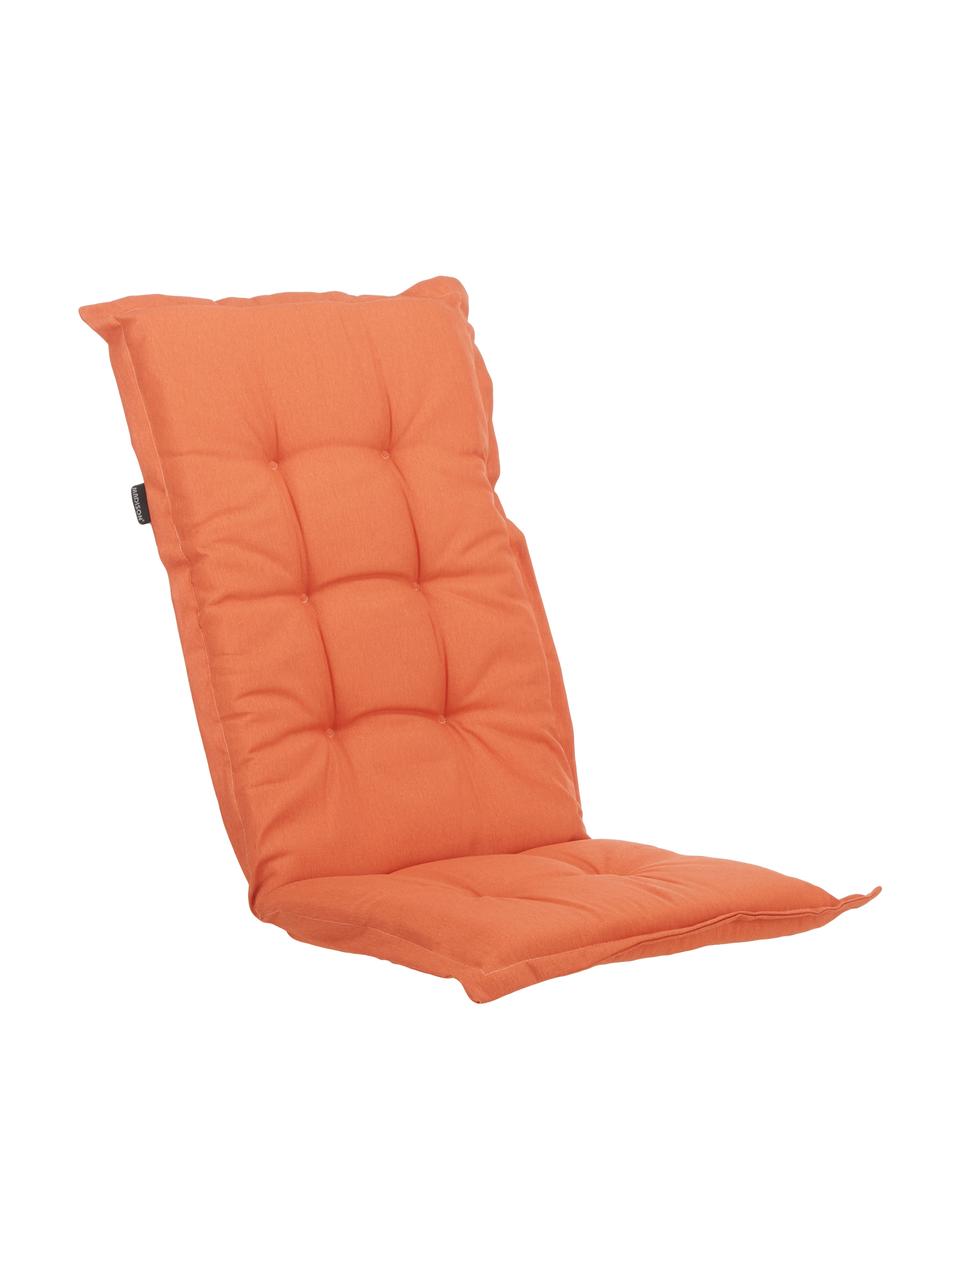 Cojín para silla con respaldo Panama, Tapizado: 50% algodón, 45% poliéste, Naranja, An 50 x L 123 cm